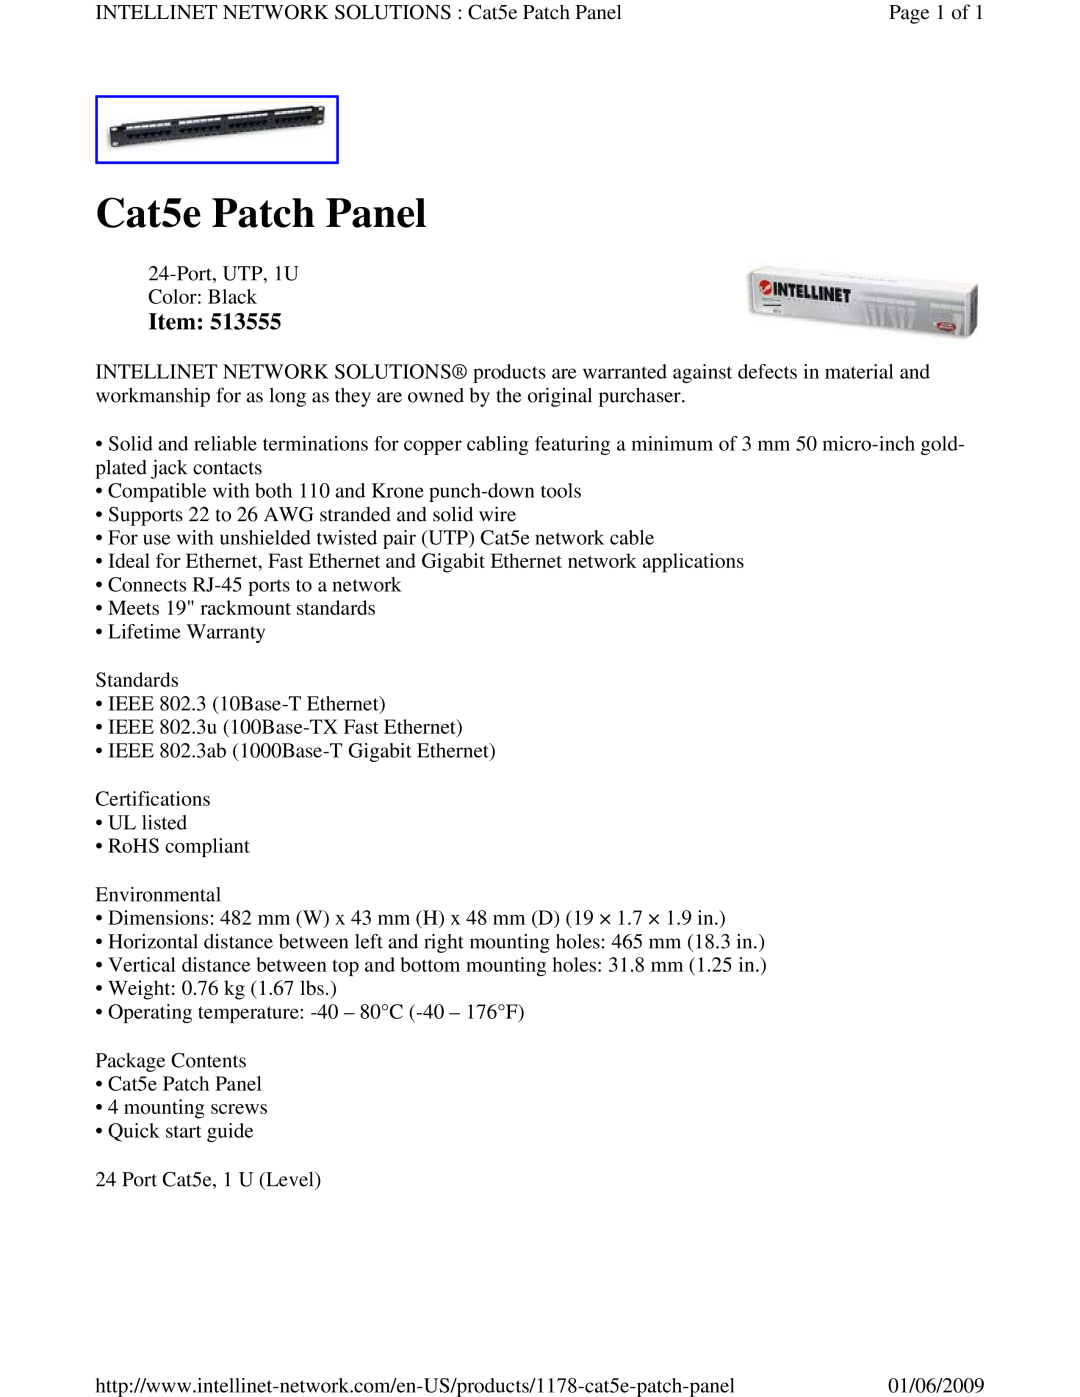 Intellinet Network Solutions ICI513555 warranty Cat5e Patch Panel 